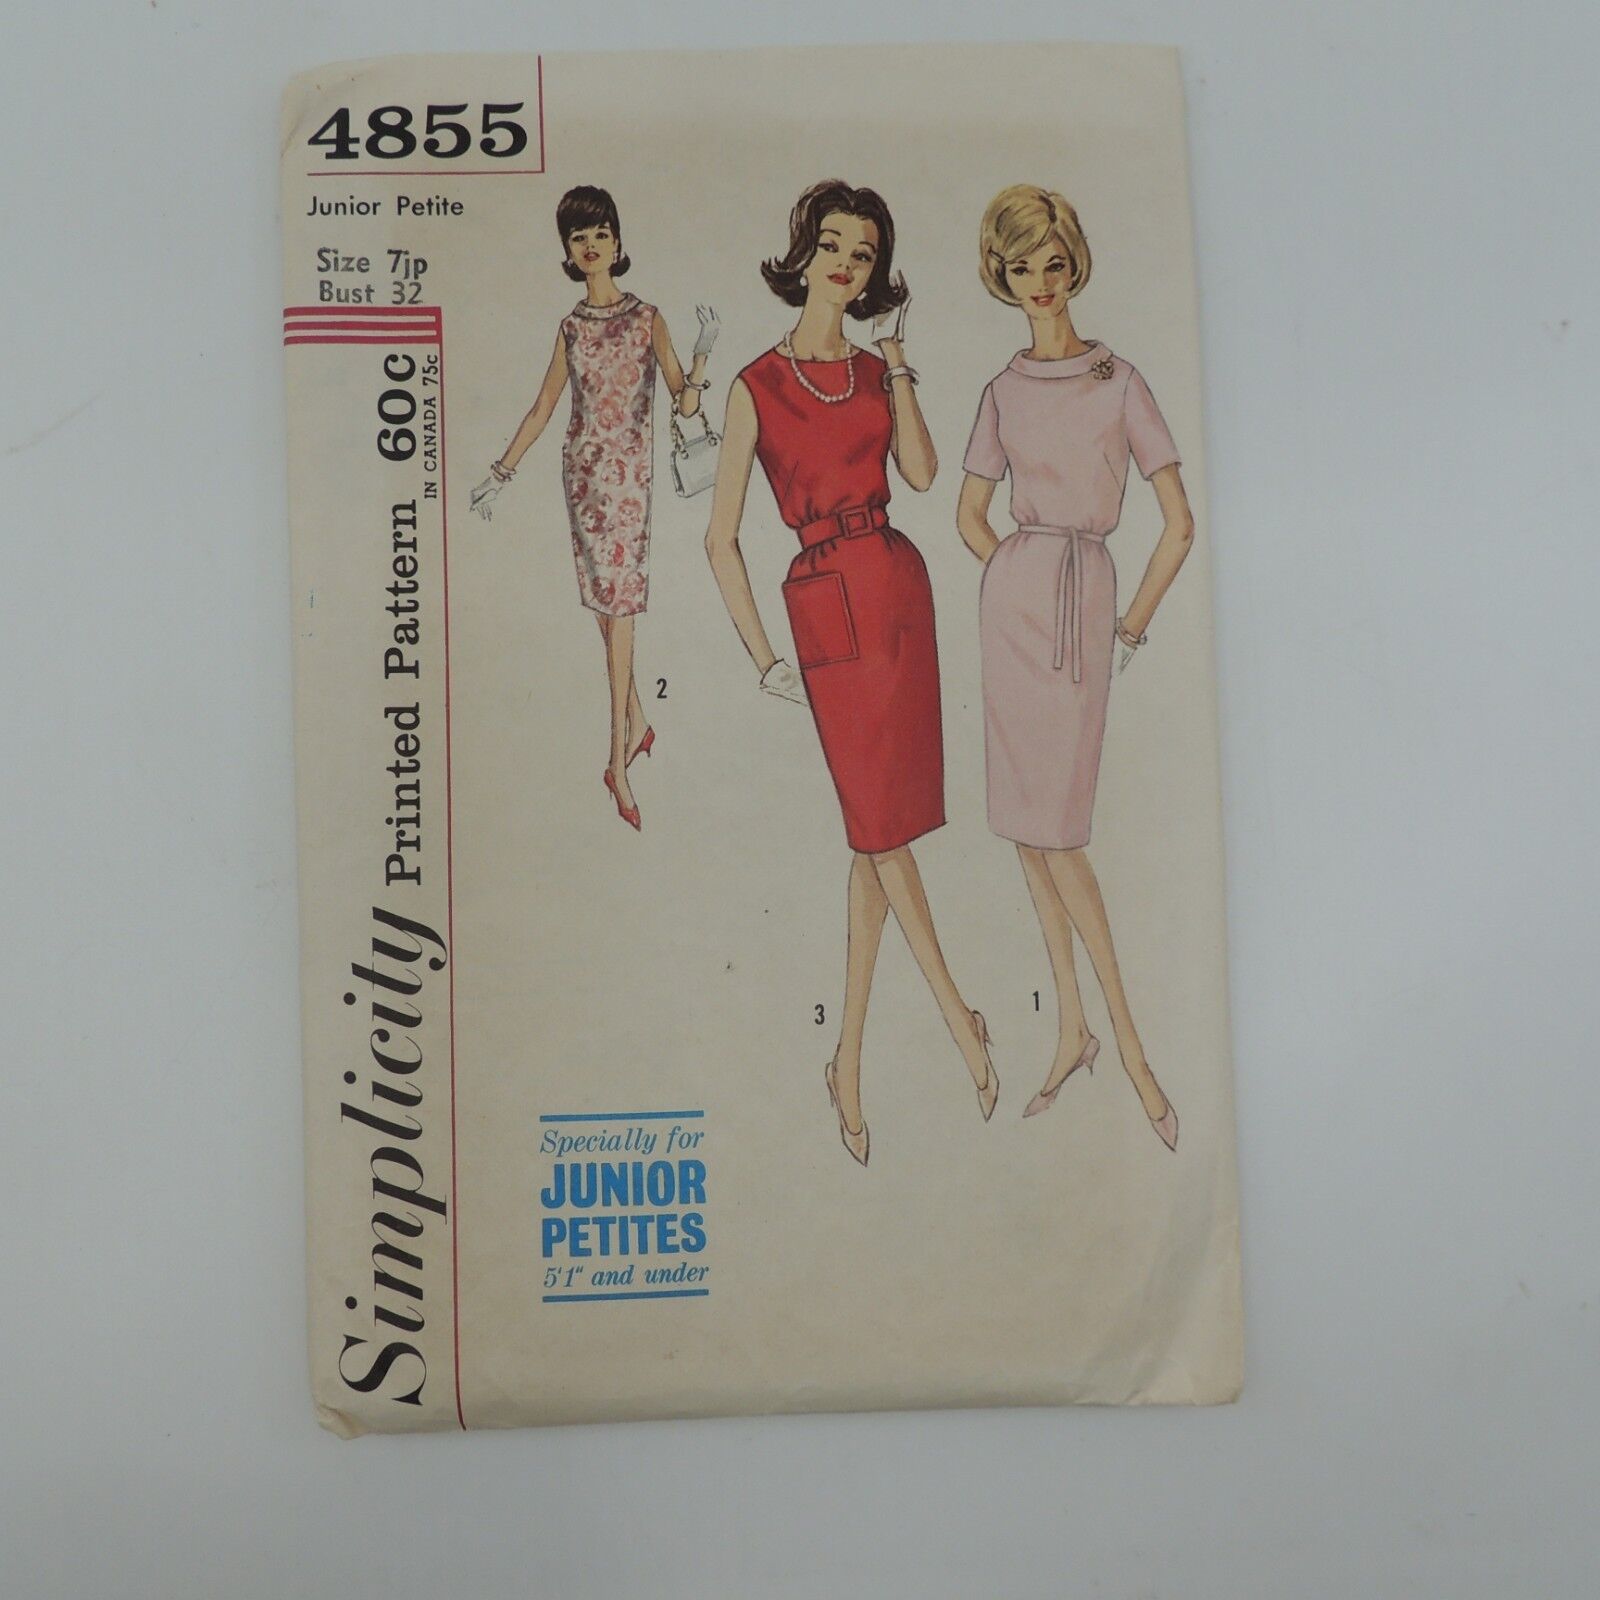 1960s Simplicity Pattern Shift Dress Petite Sz 7jp Bust 32 #4855